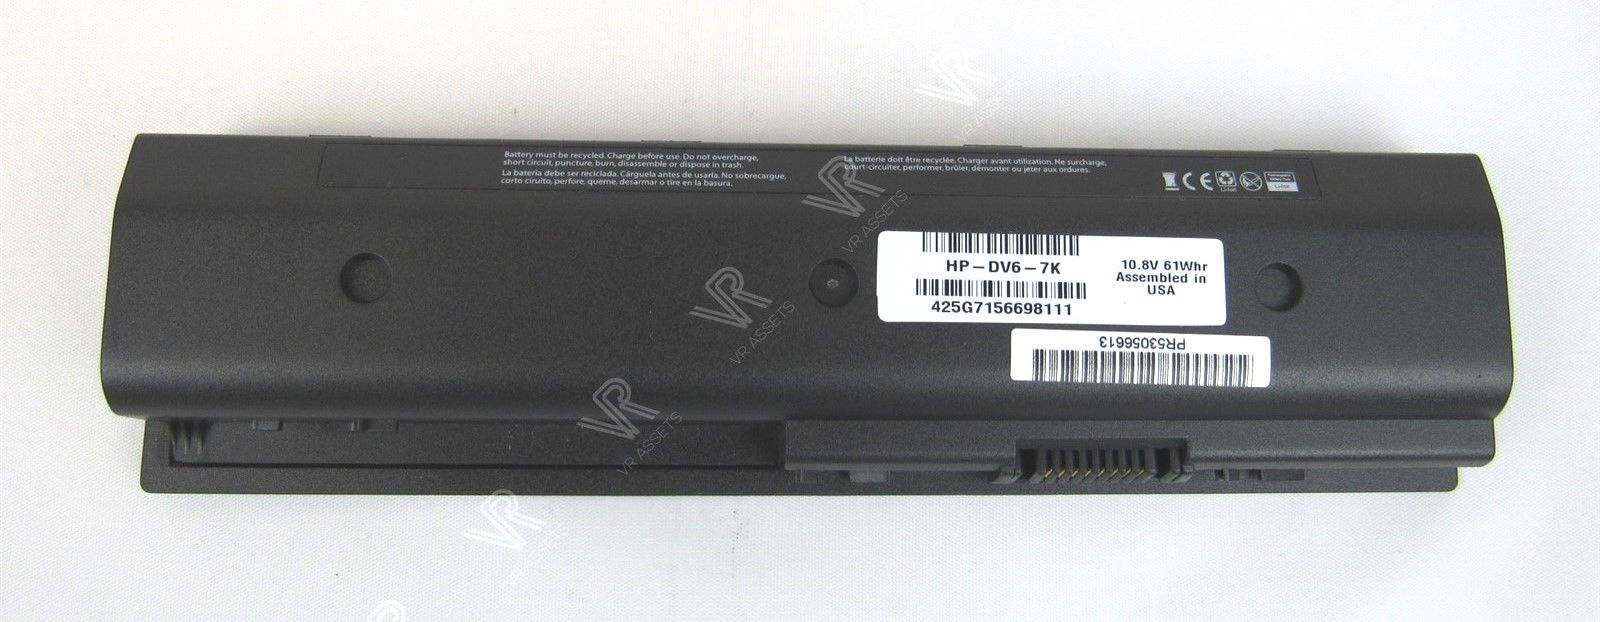 Battery for HP Compaq DV6-7000 DV6-8000 DV4-5000 DV4-5099 10.8V 61Whr HP-DV6-7K